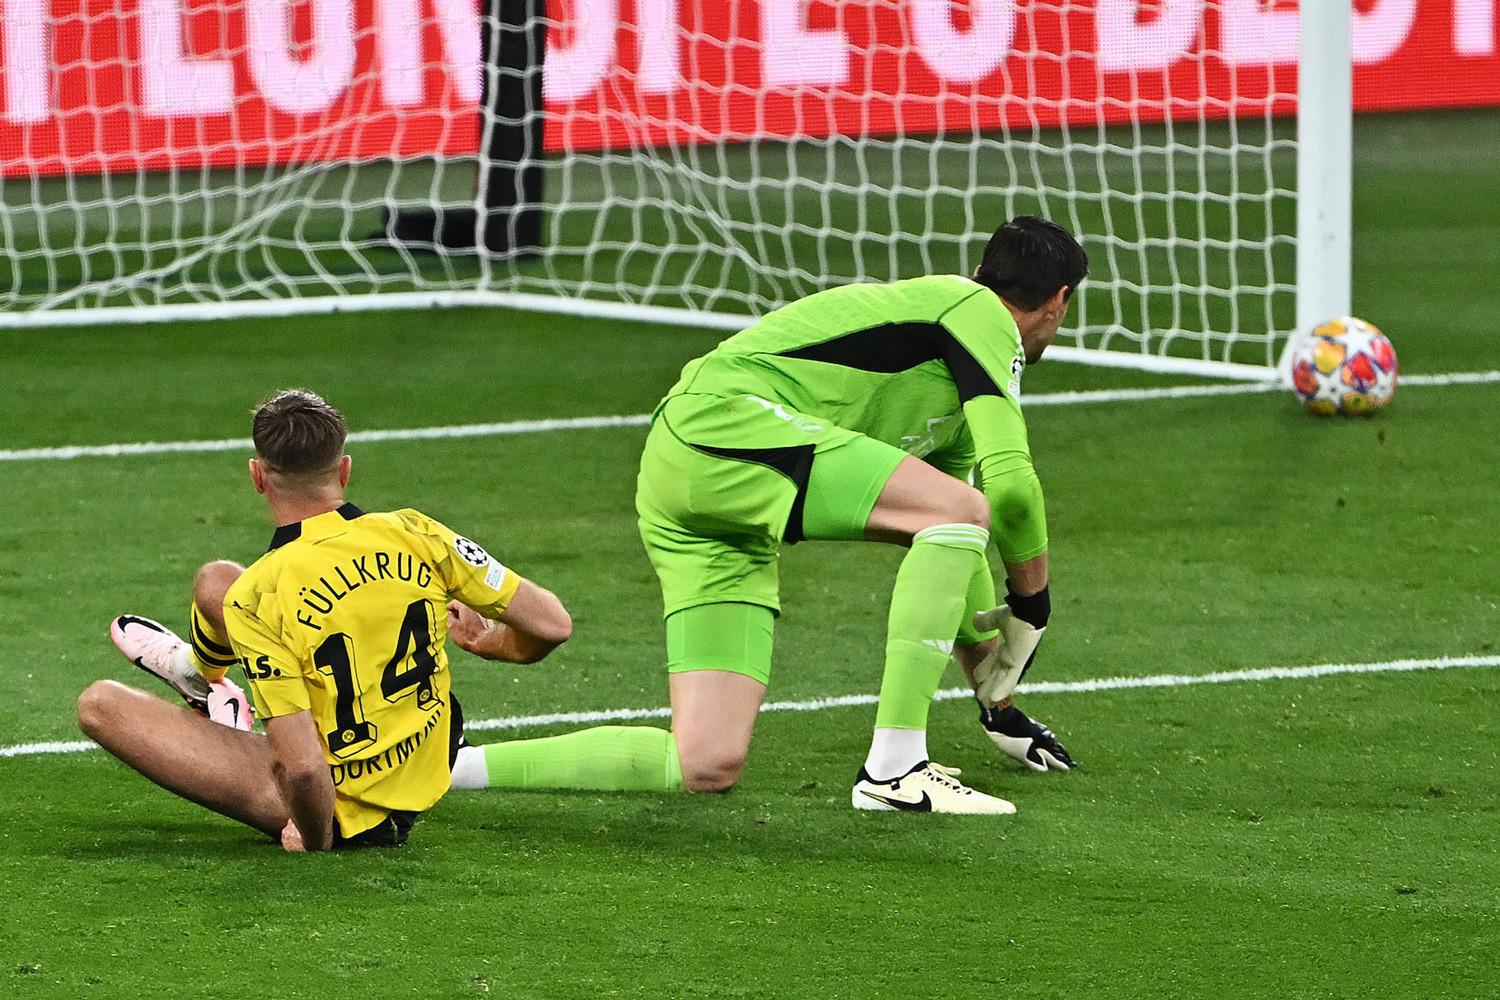 Fullkrug Real Madrid Dortmund.jpg